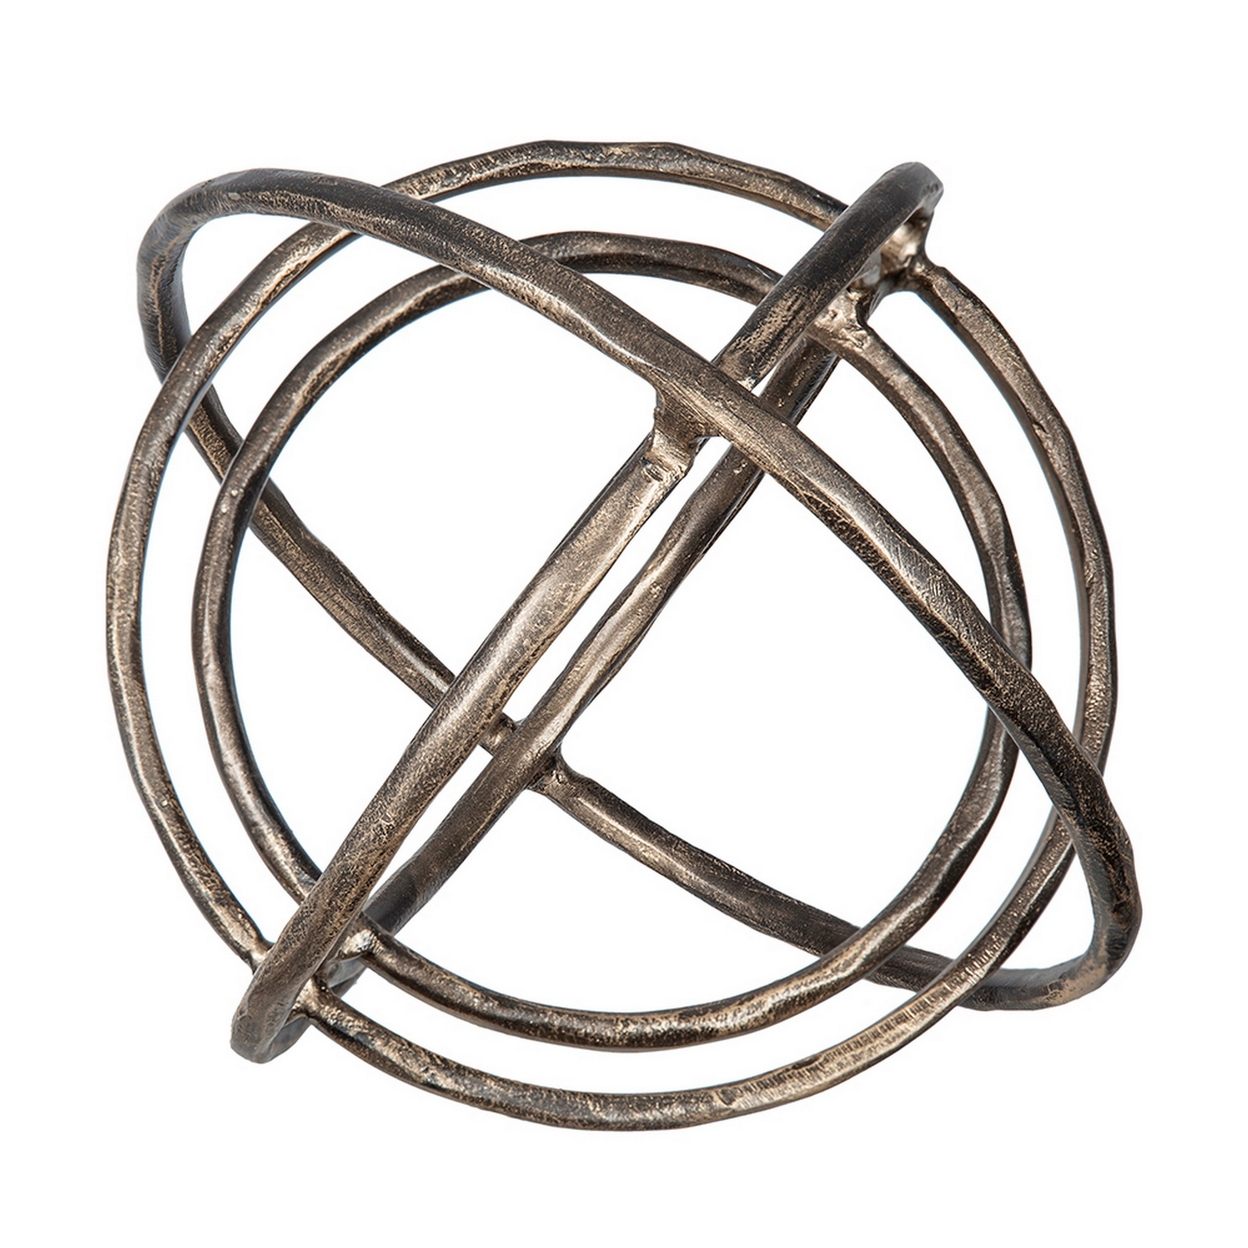 11 Inch Decorative Armillary Sphere With Overlapping Rings, Bronze Aluminum- Saltoro Sherpi